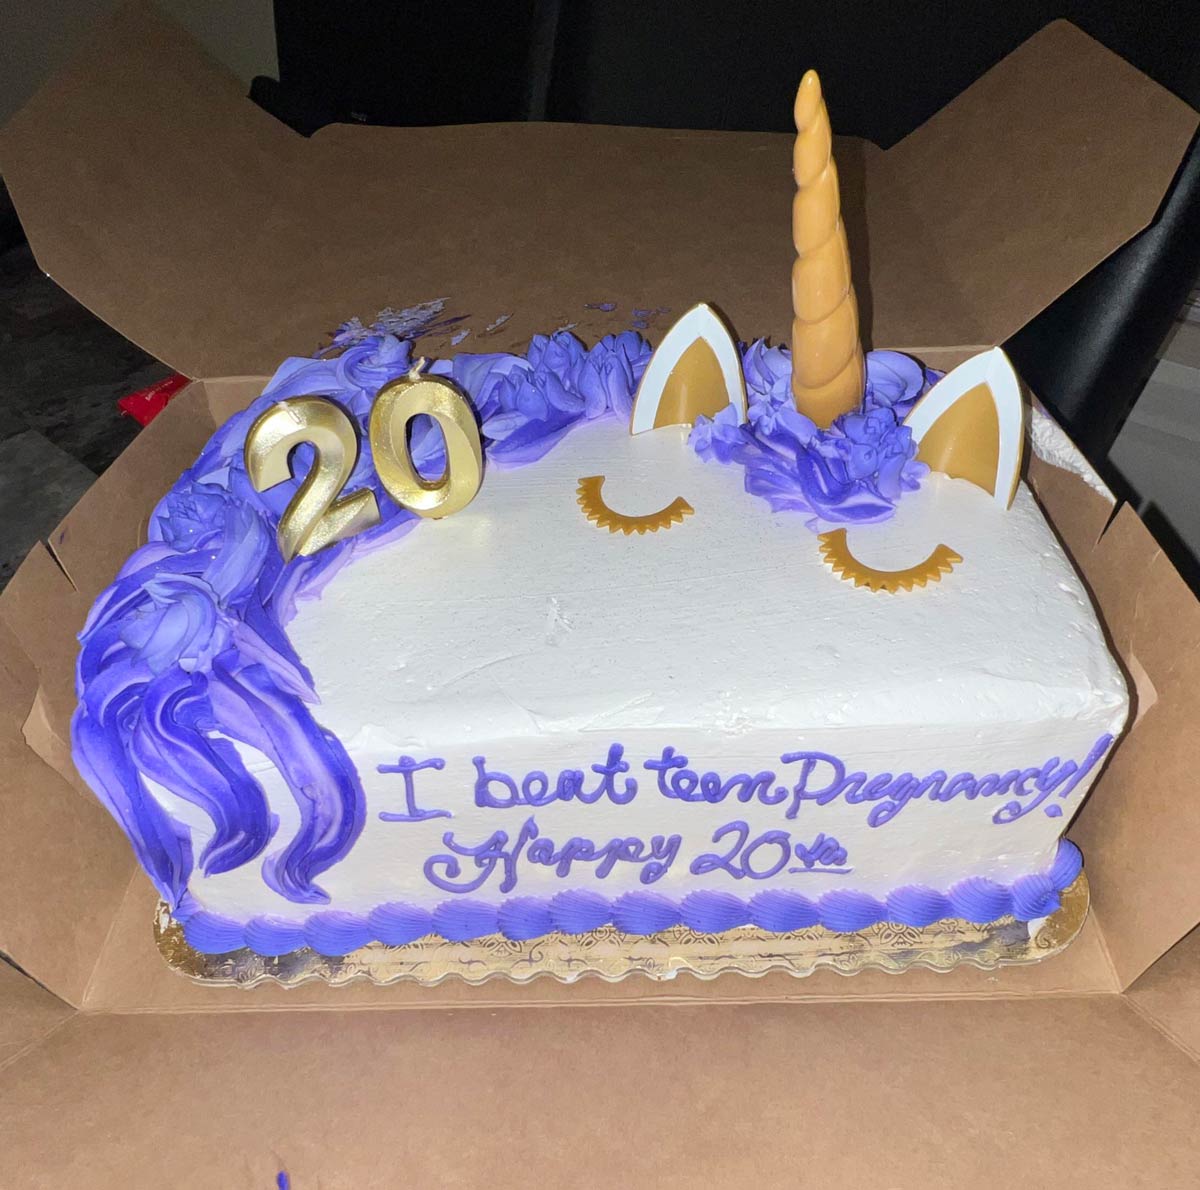 My 20th birthday cake